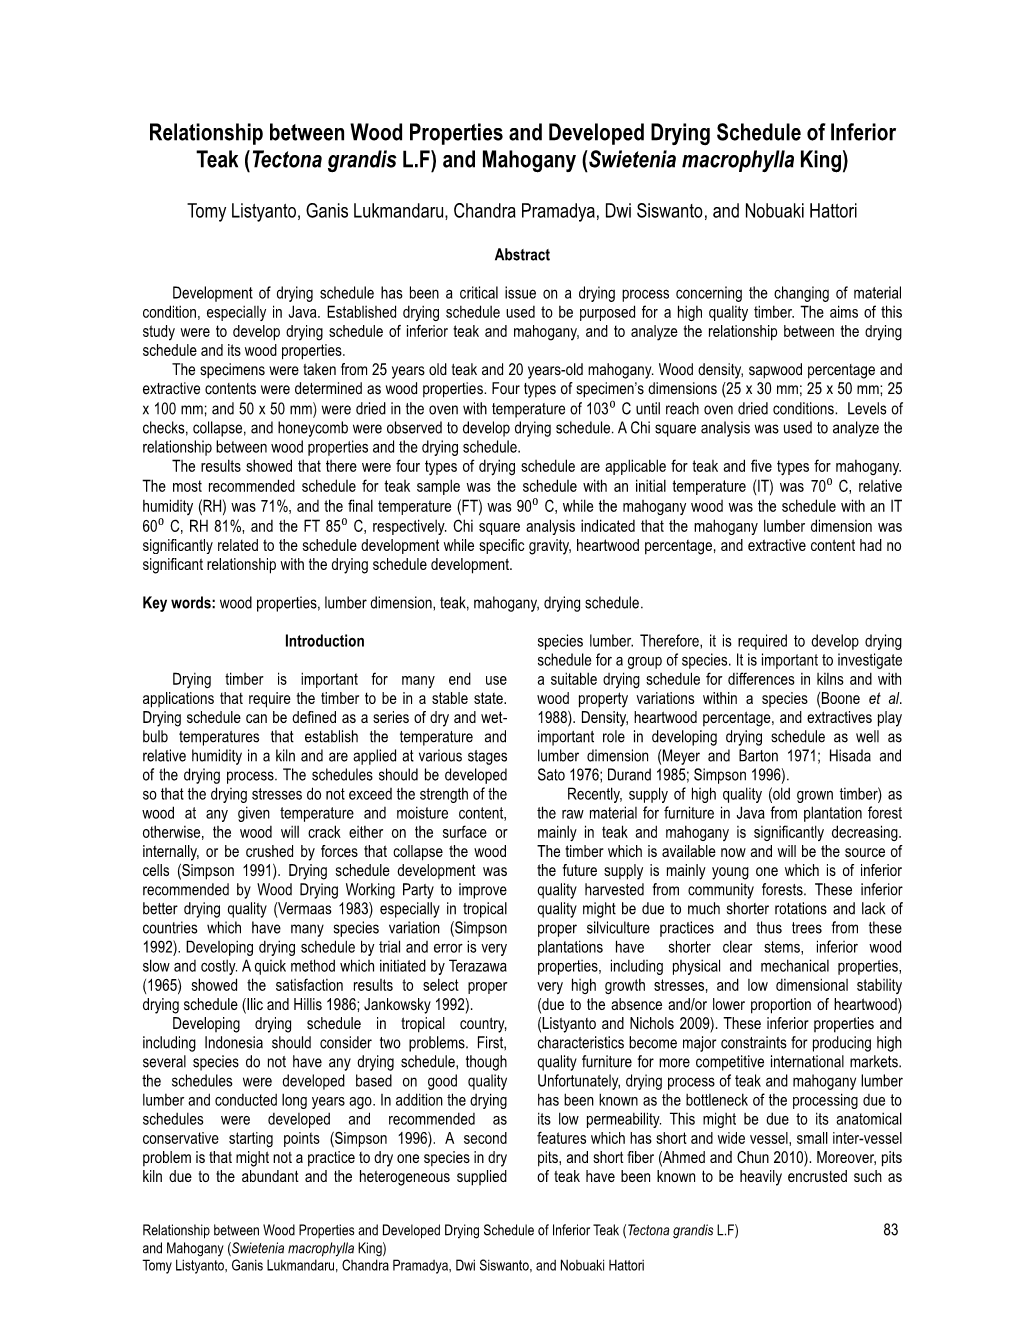 Relationship Between Wood Properties and Developed Drying Schedule of Inferior Teak (Tectona Grandis L.F) and Mahogany (Swietenia Macrophylla King)